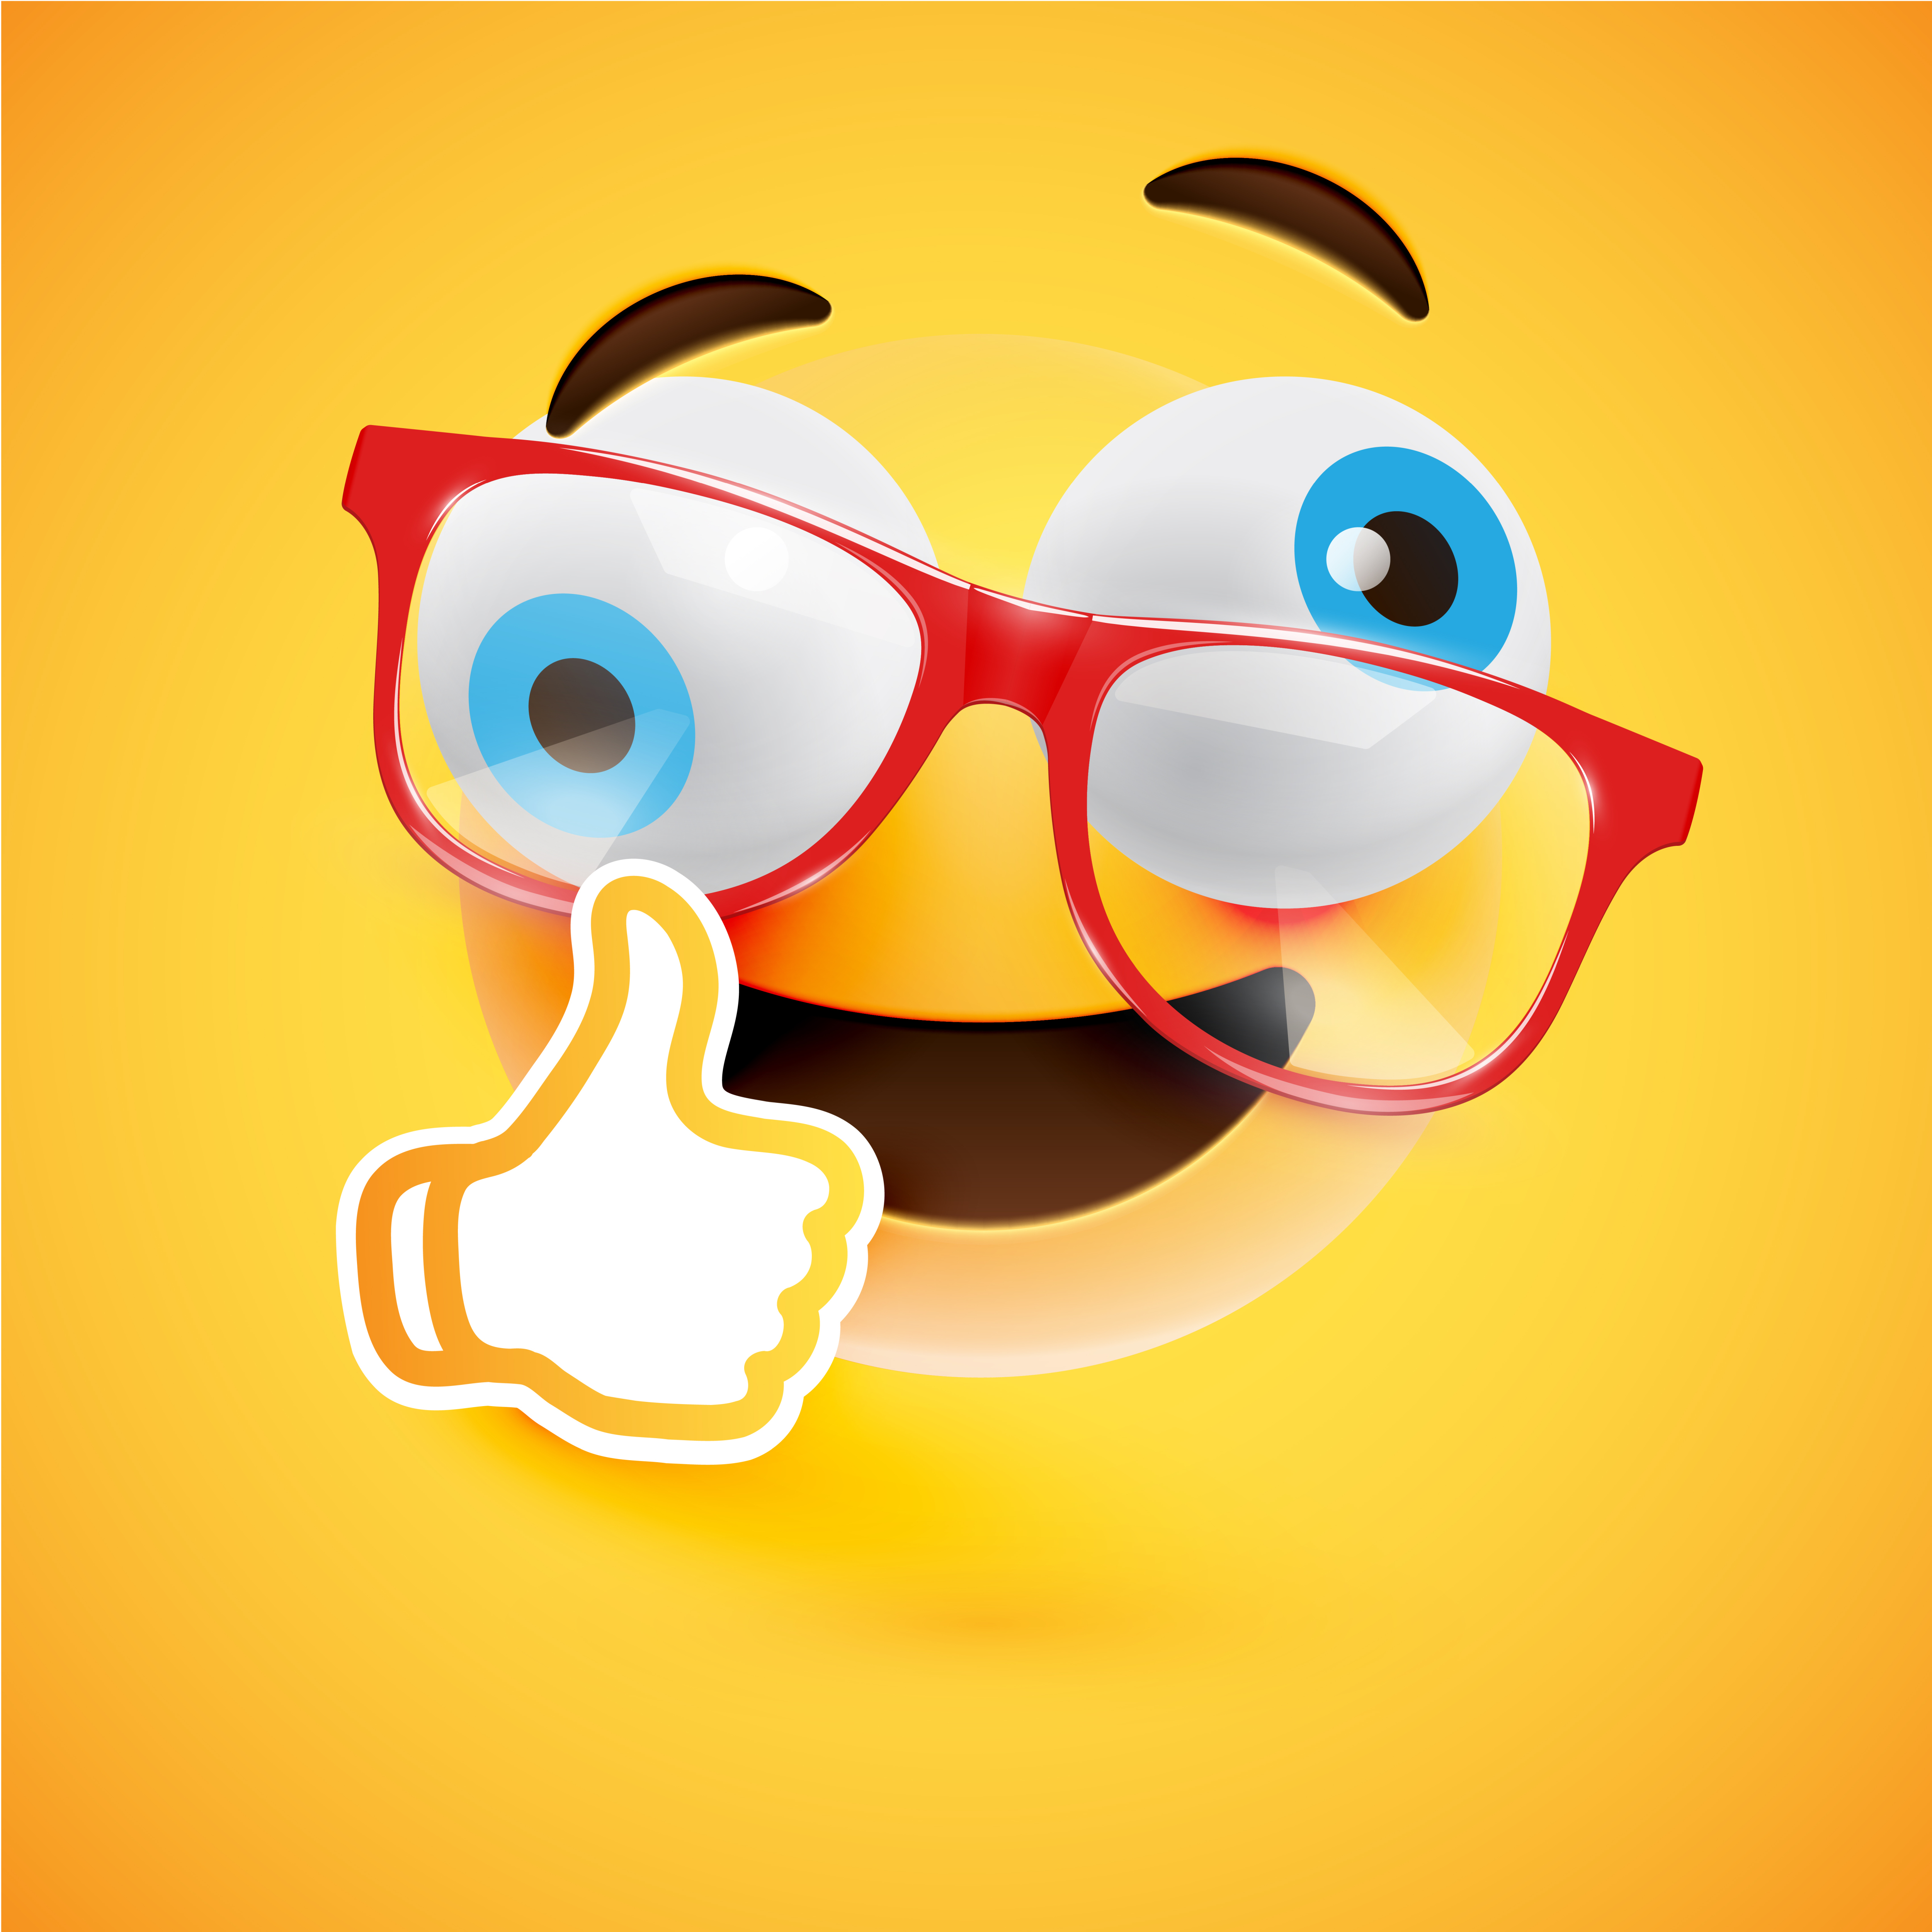 Realistic Thumbs Up Emoji